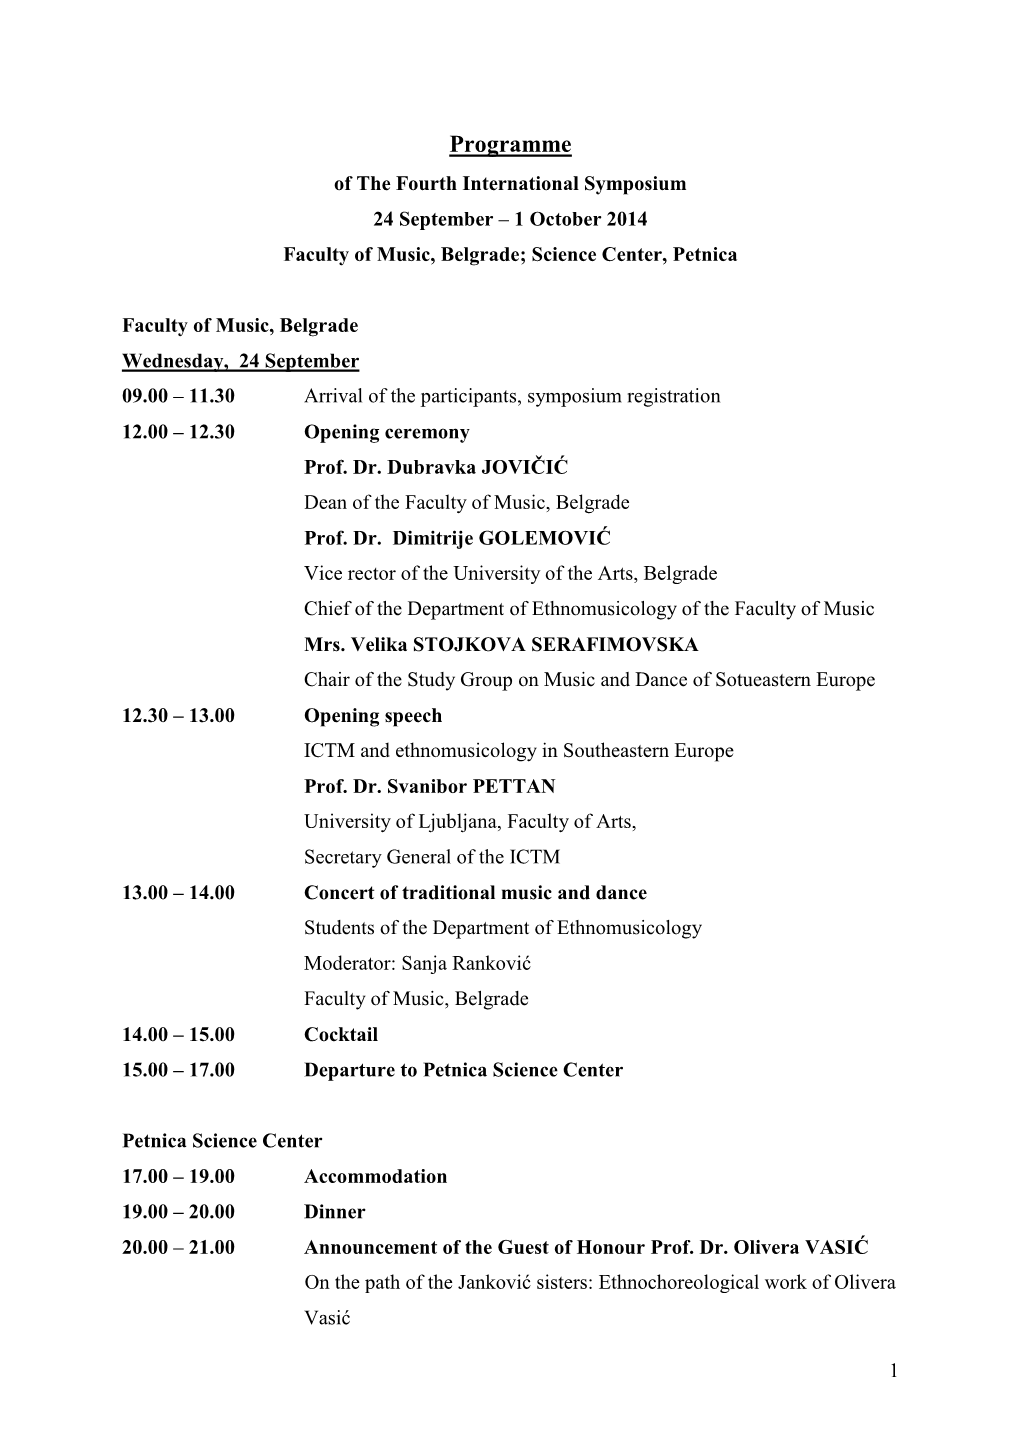 Preliminary Program of the Fourth International Symposium .Pdf